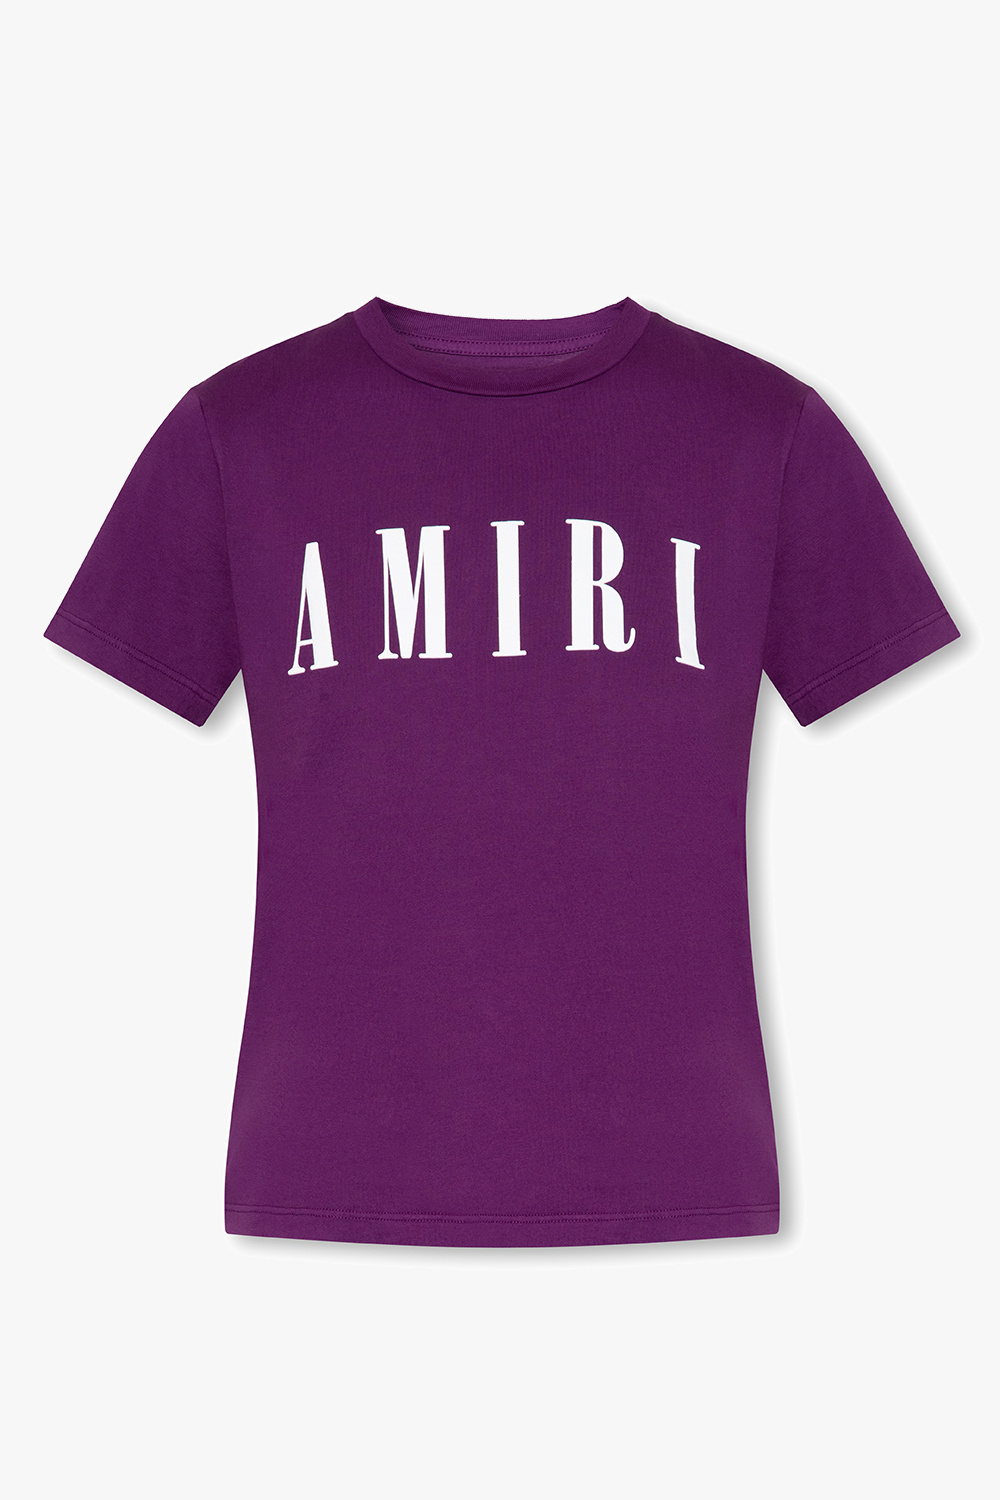 Amiri T | Women's Clothing - plaid check pattern shirt jacket Blue | shirt  with logo - StclaircomoShops